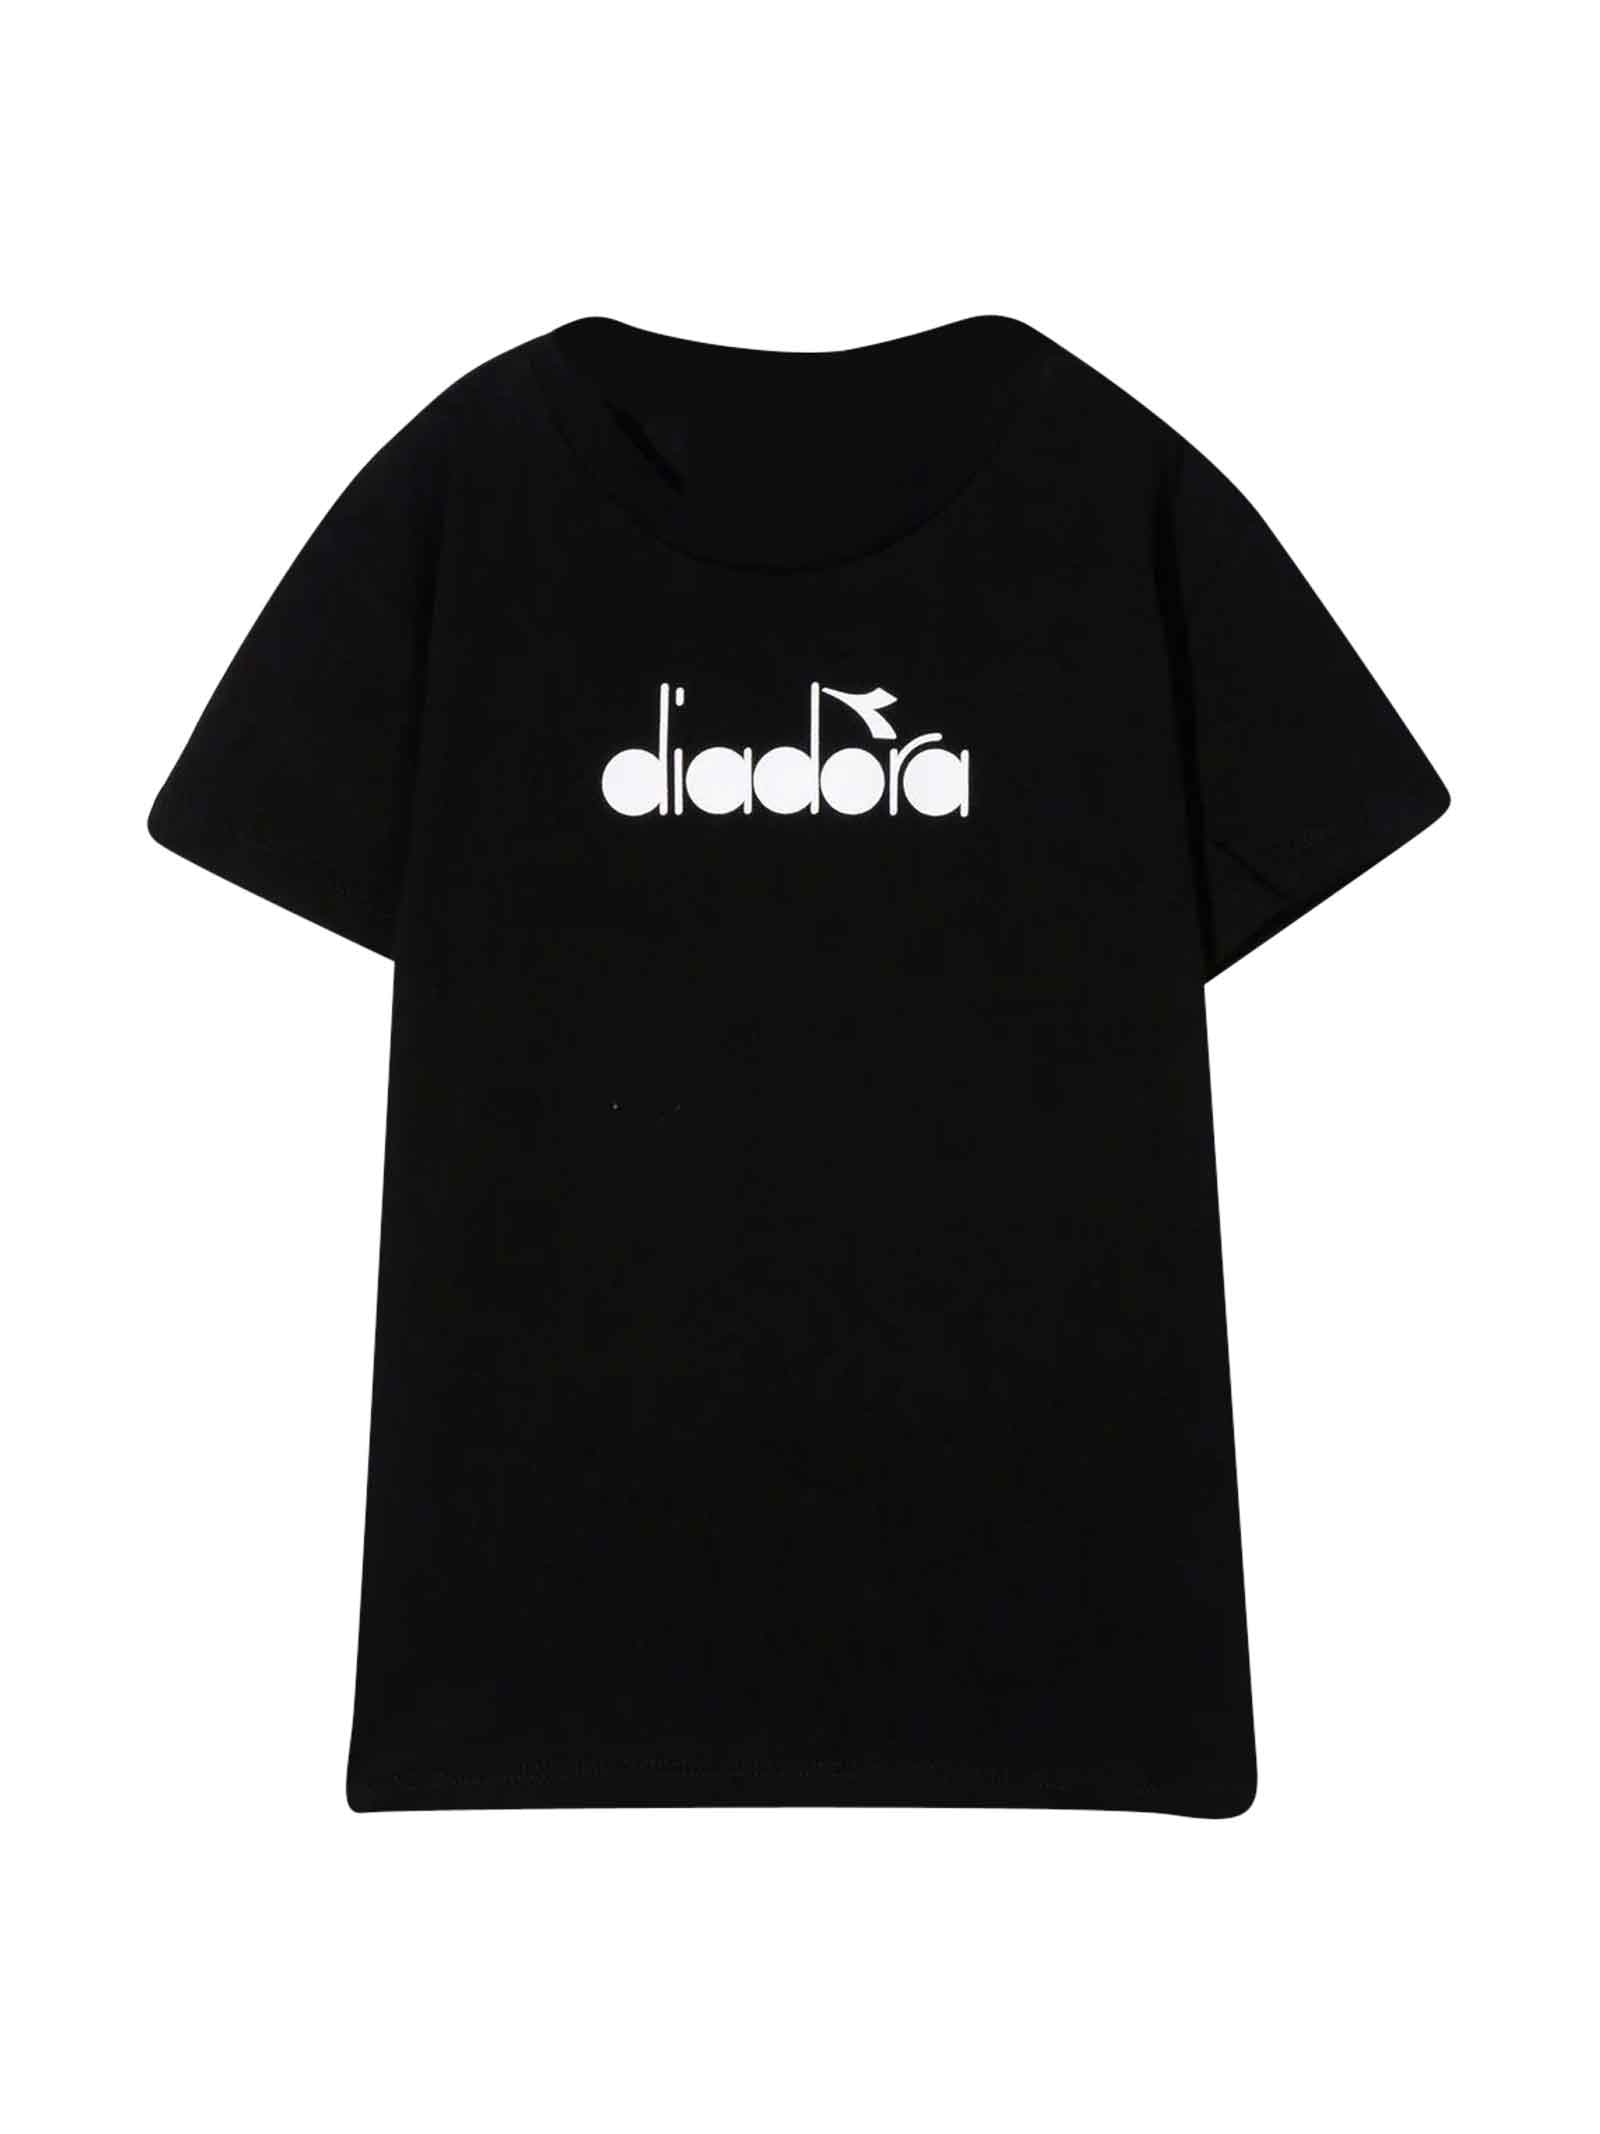 Diadora Black T-shirt Teen Boy